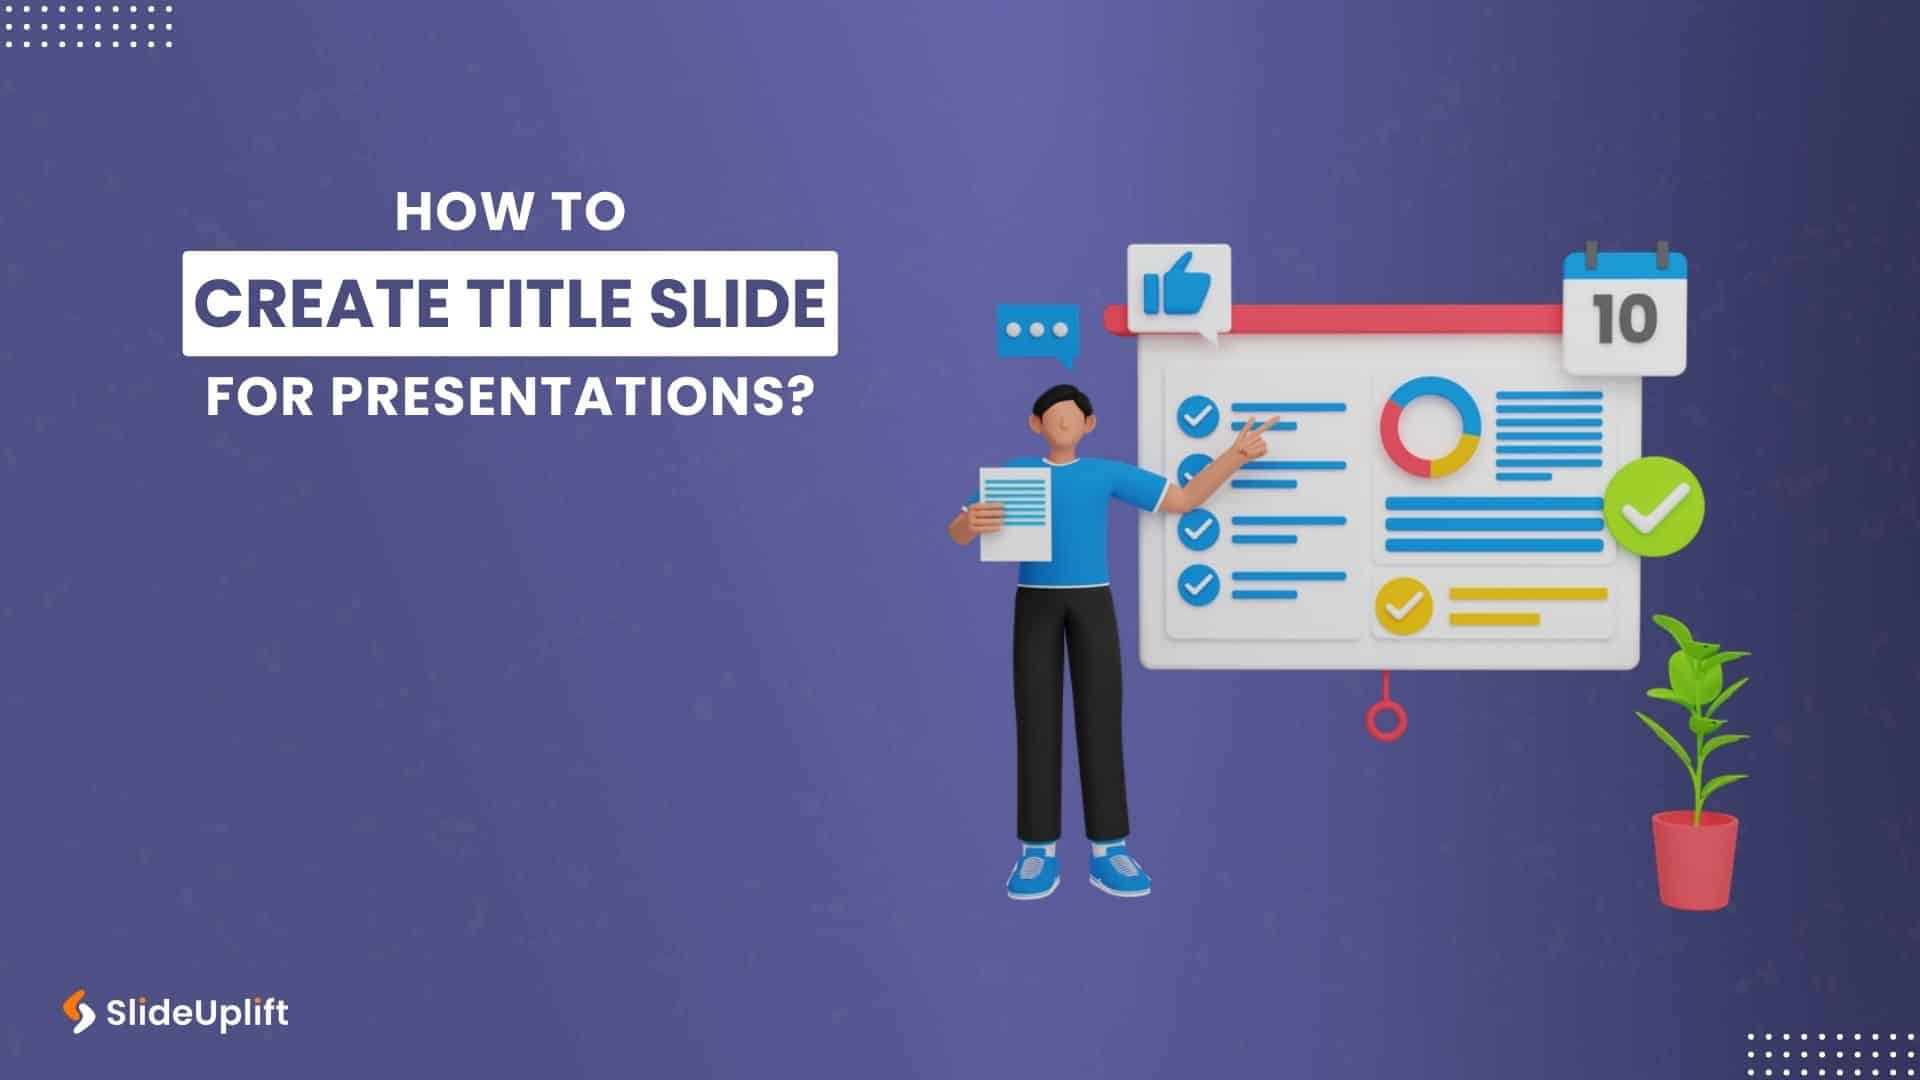 hide slides during presentation powerpoint